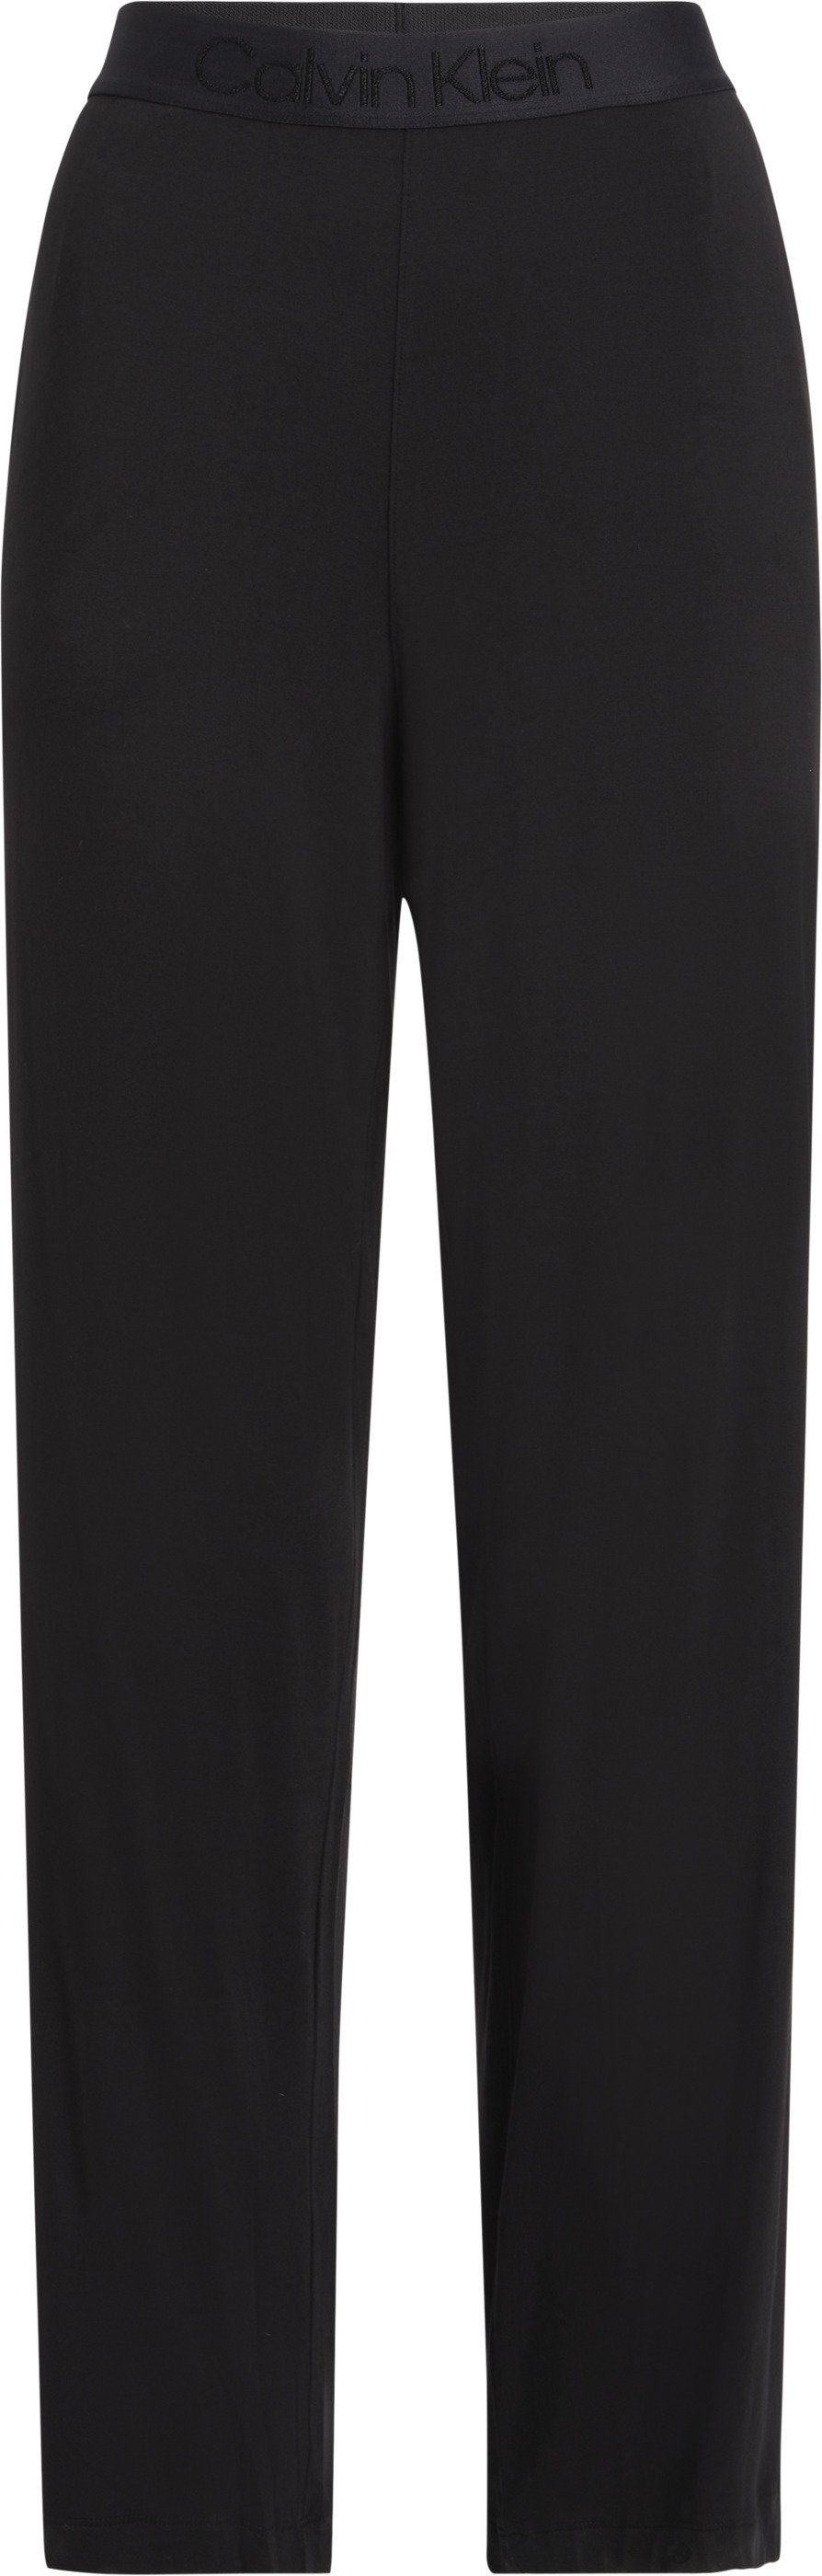 Calvin Klein Underwear Pyjamahose SLEEP PANT mit elastischem Bund,  Pyjamahose von Calvin Klein Underwear